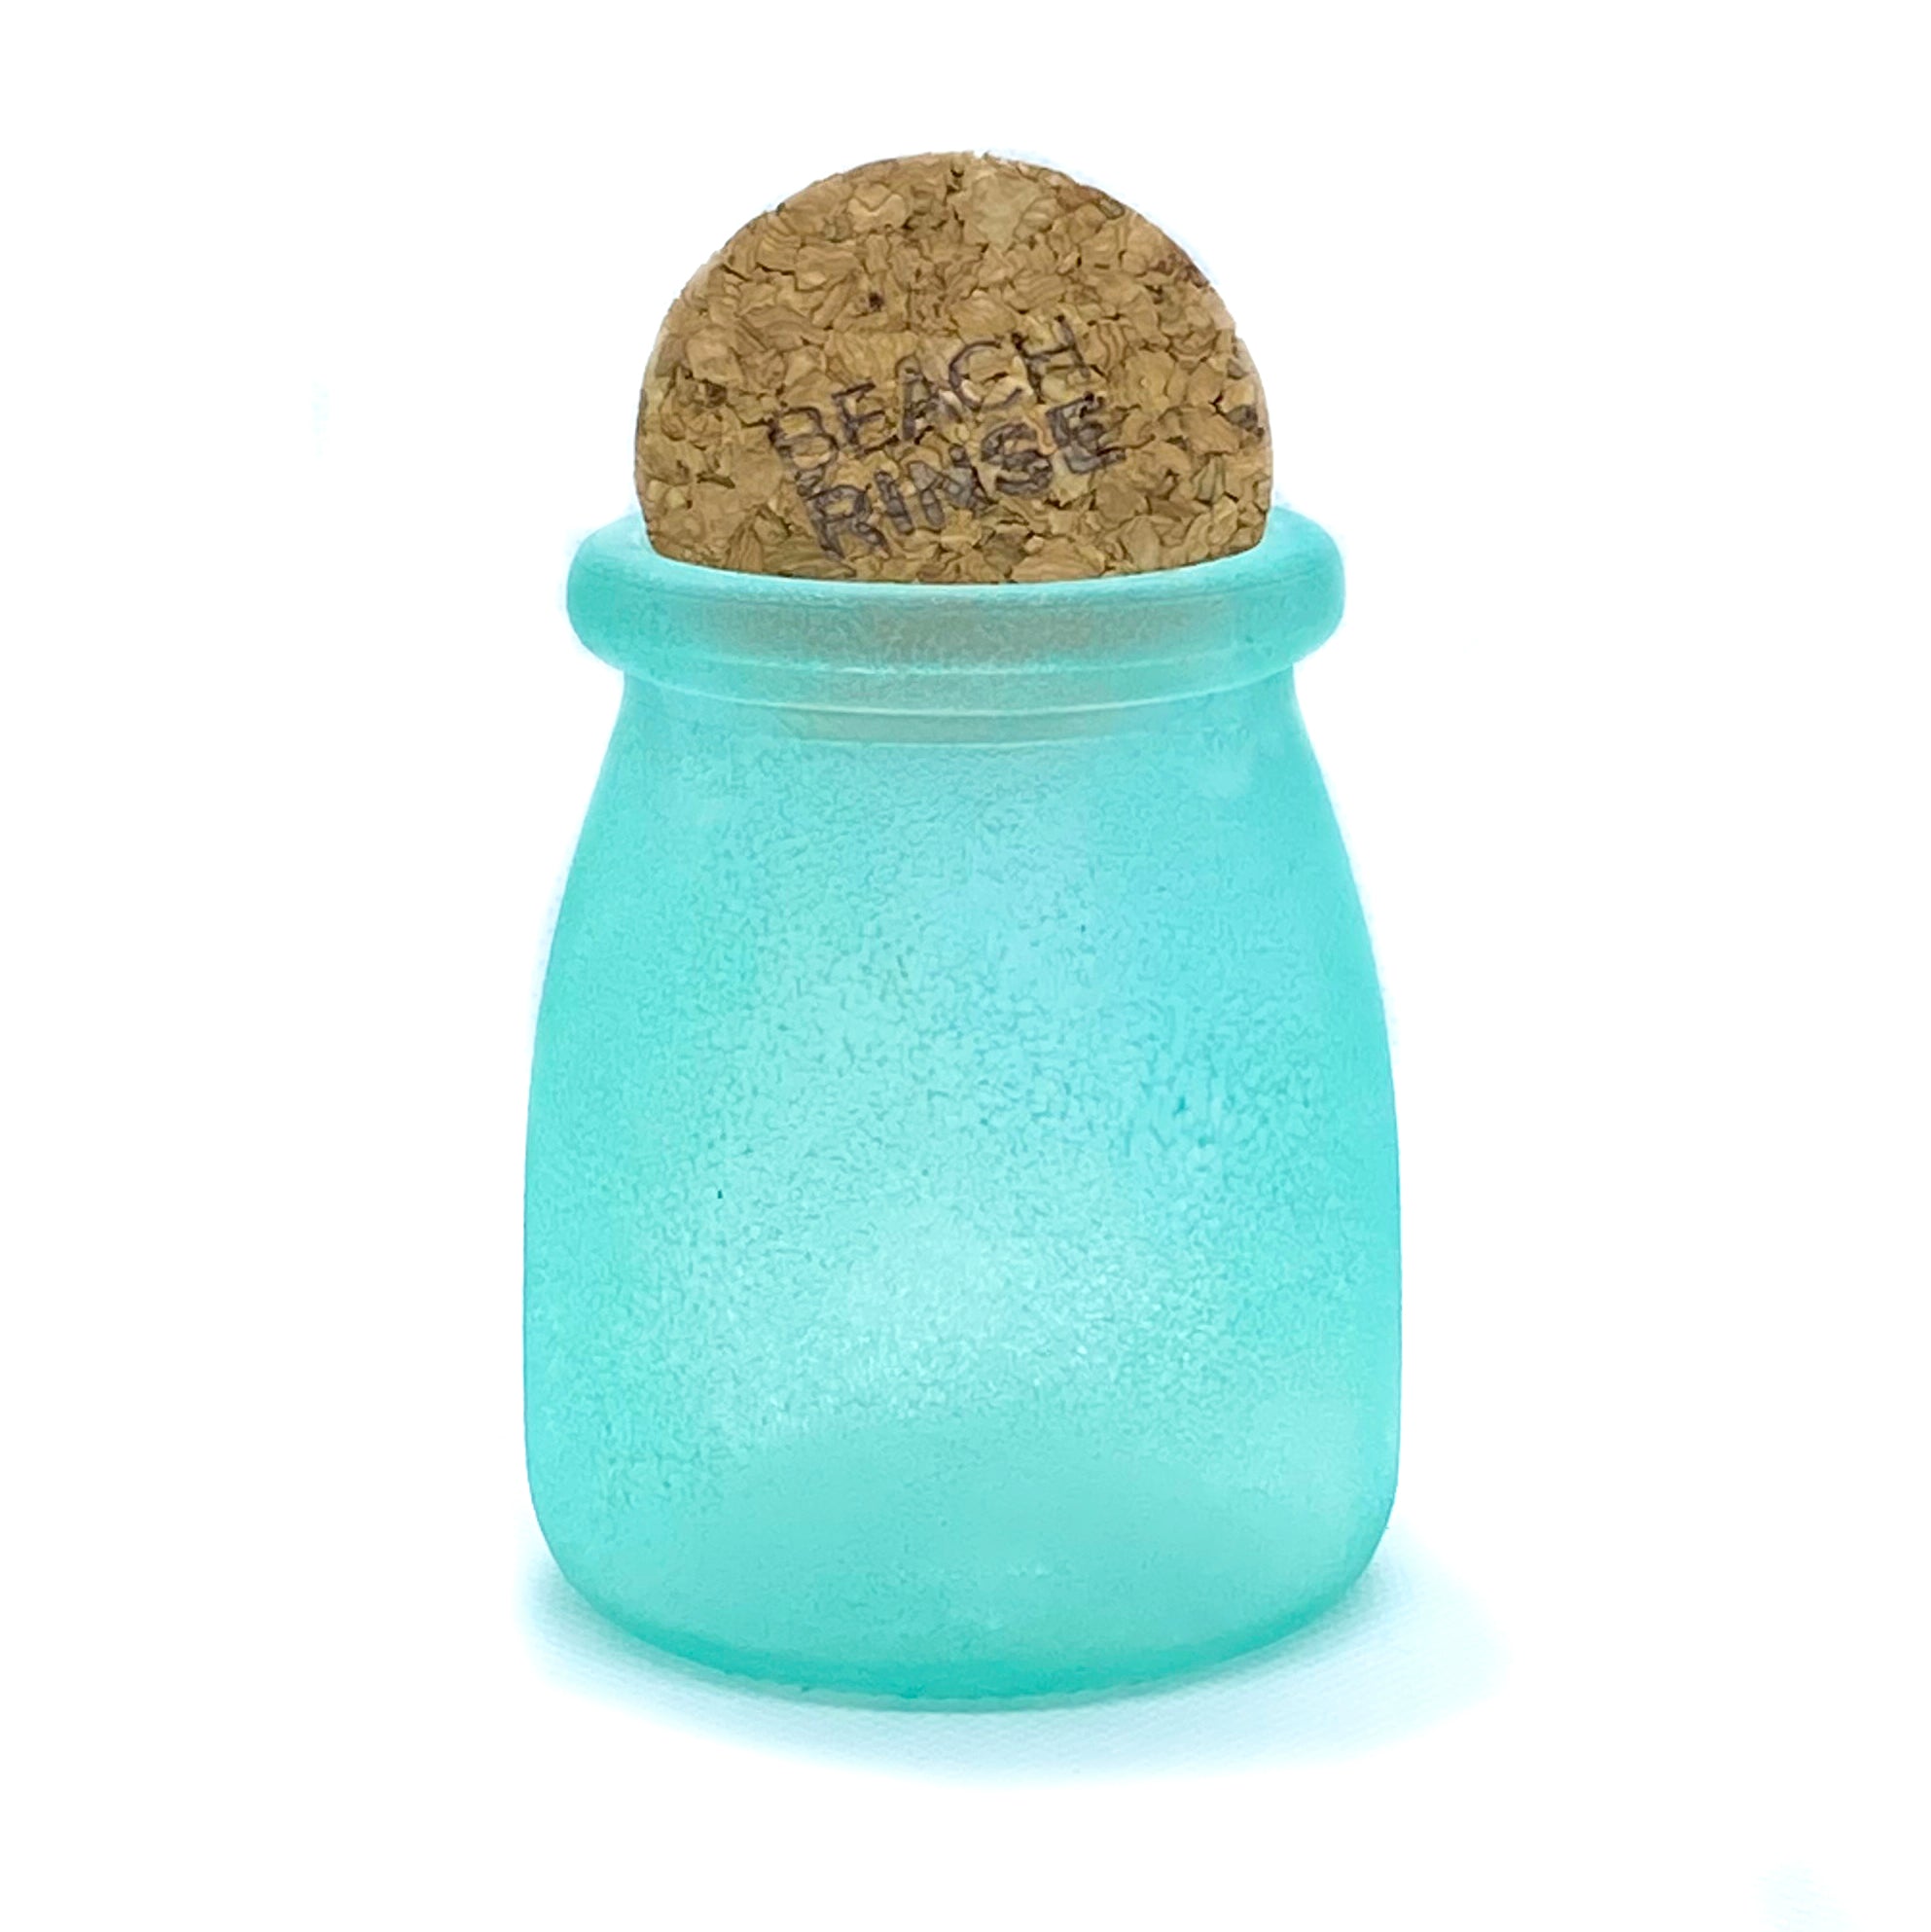 Jar of Genuine Found Beach Glass - Relish, Inc. Store